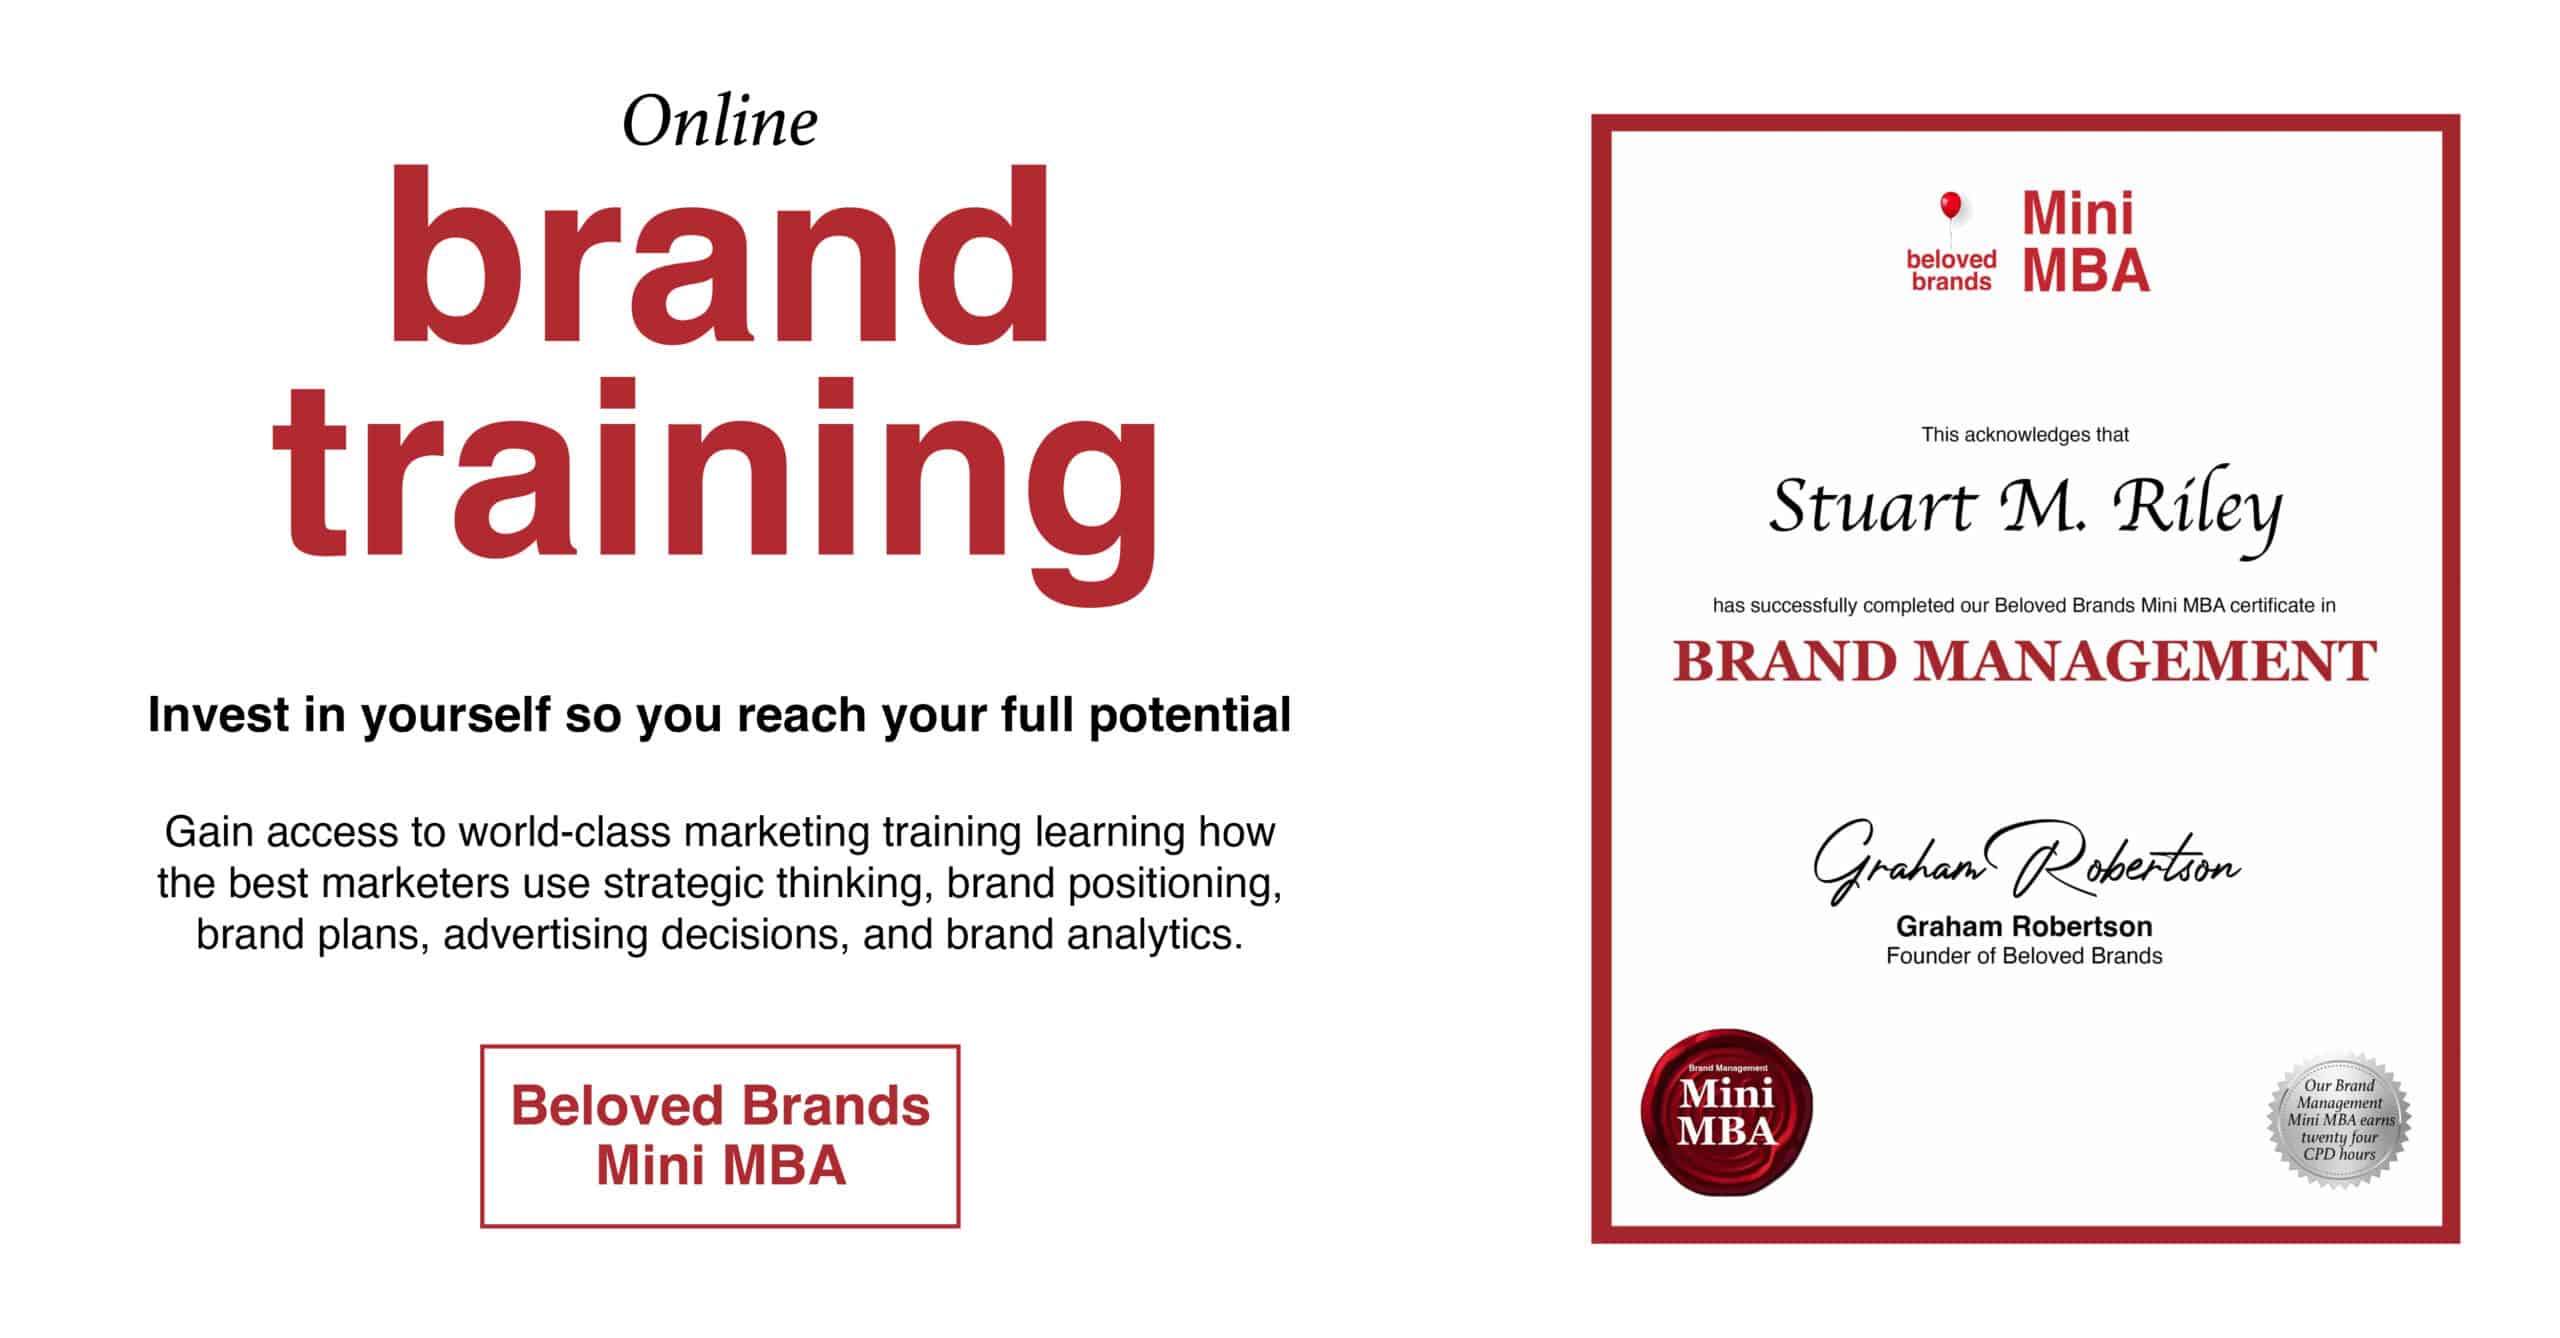 Mini MBA Brand Management Certificate